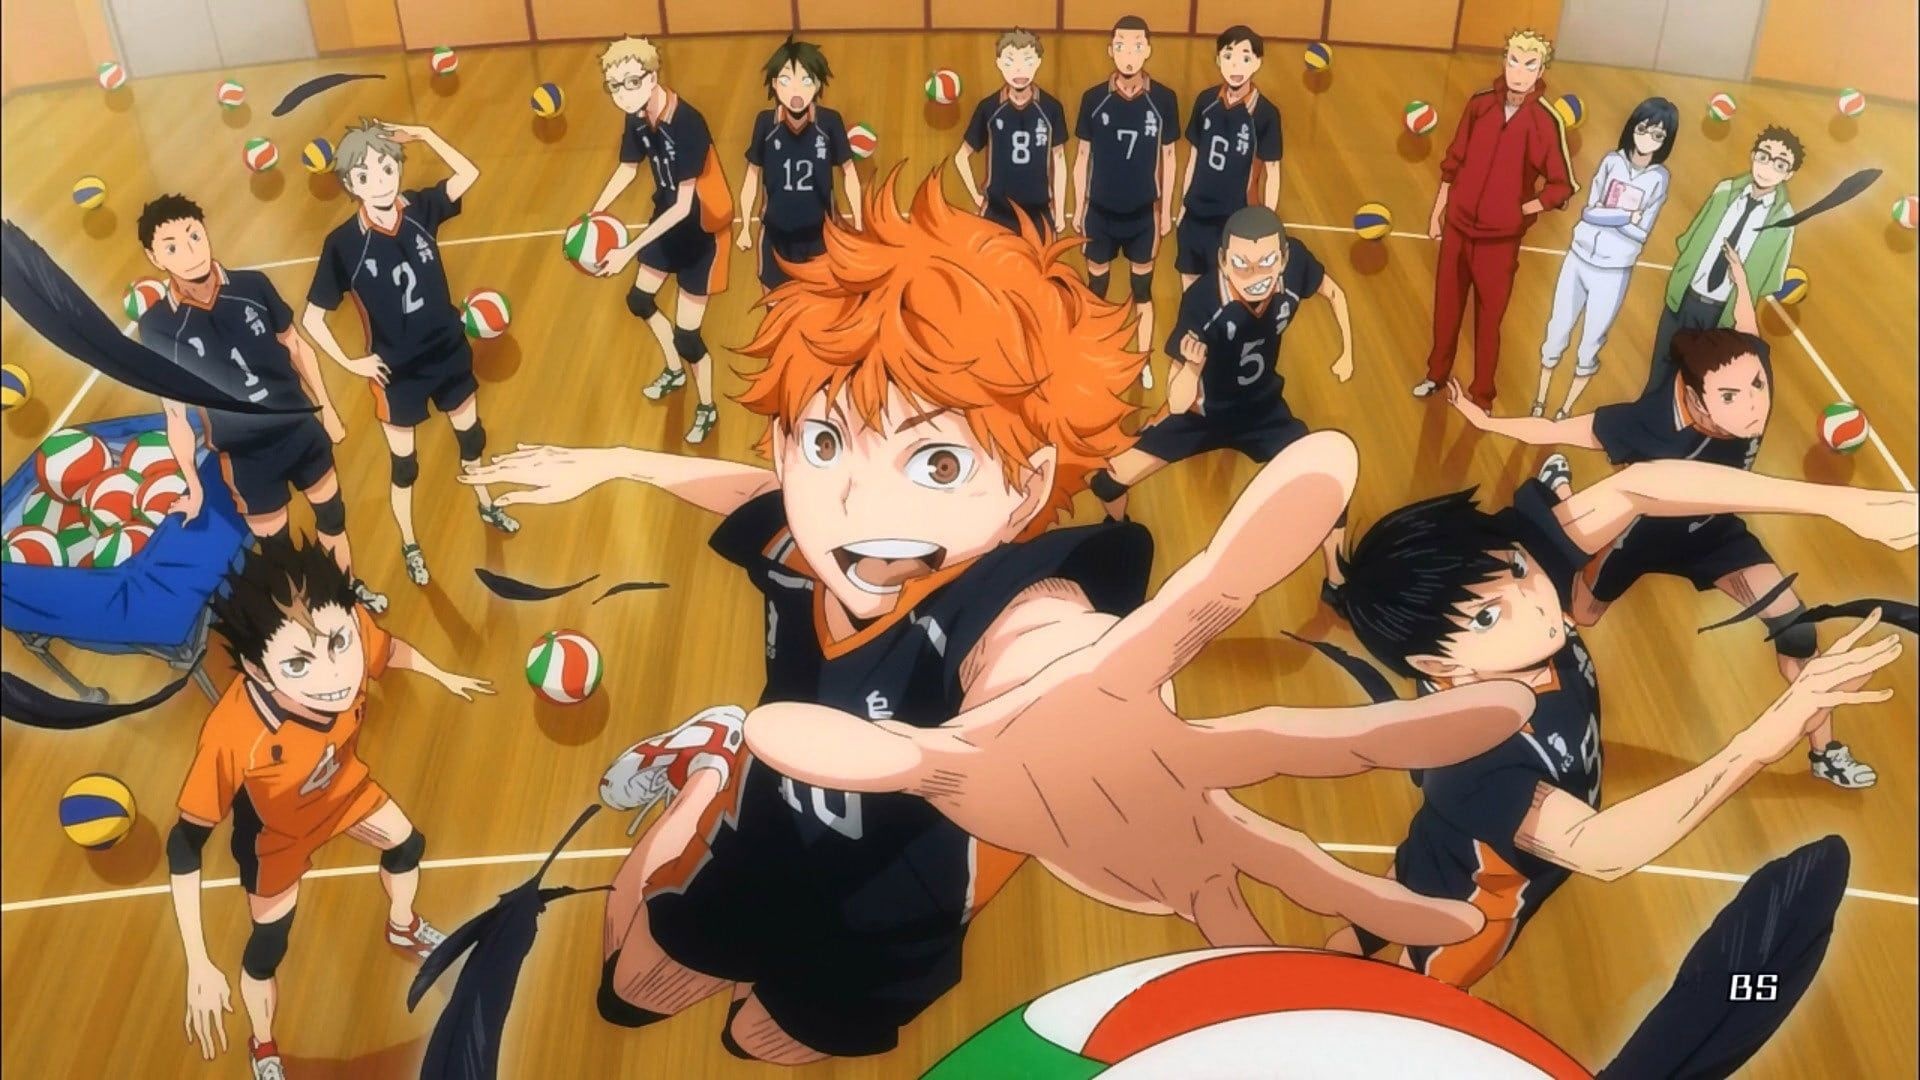 Haikyuu!!: Volleyball Anime, Training jumping. 1920x1080 Full HD Wallpaper.